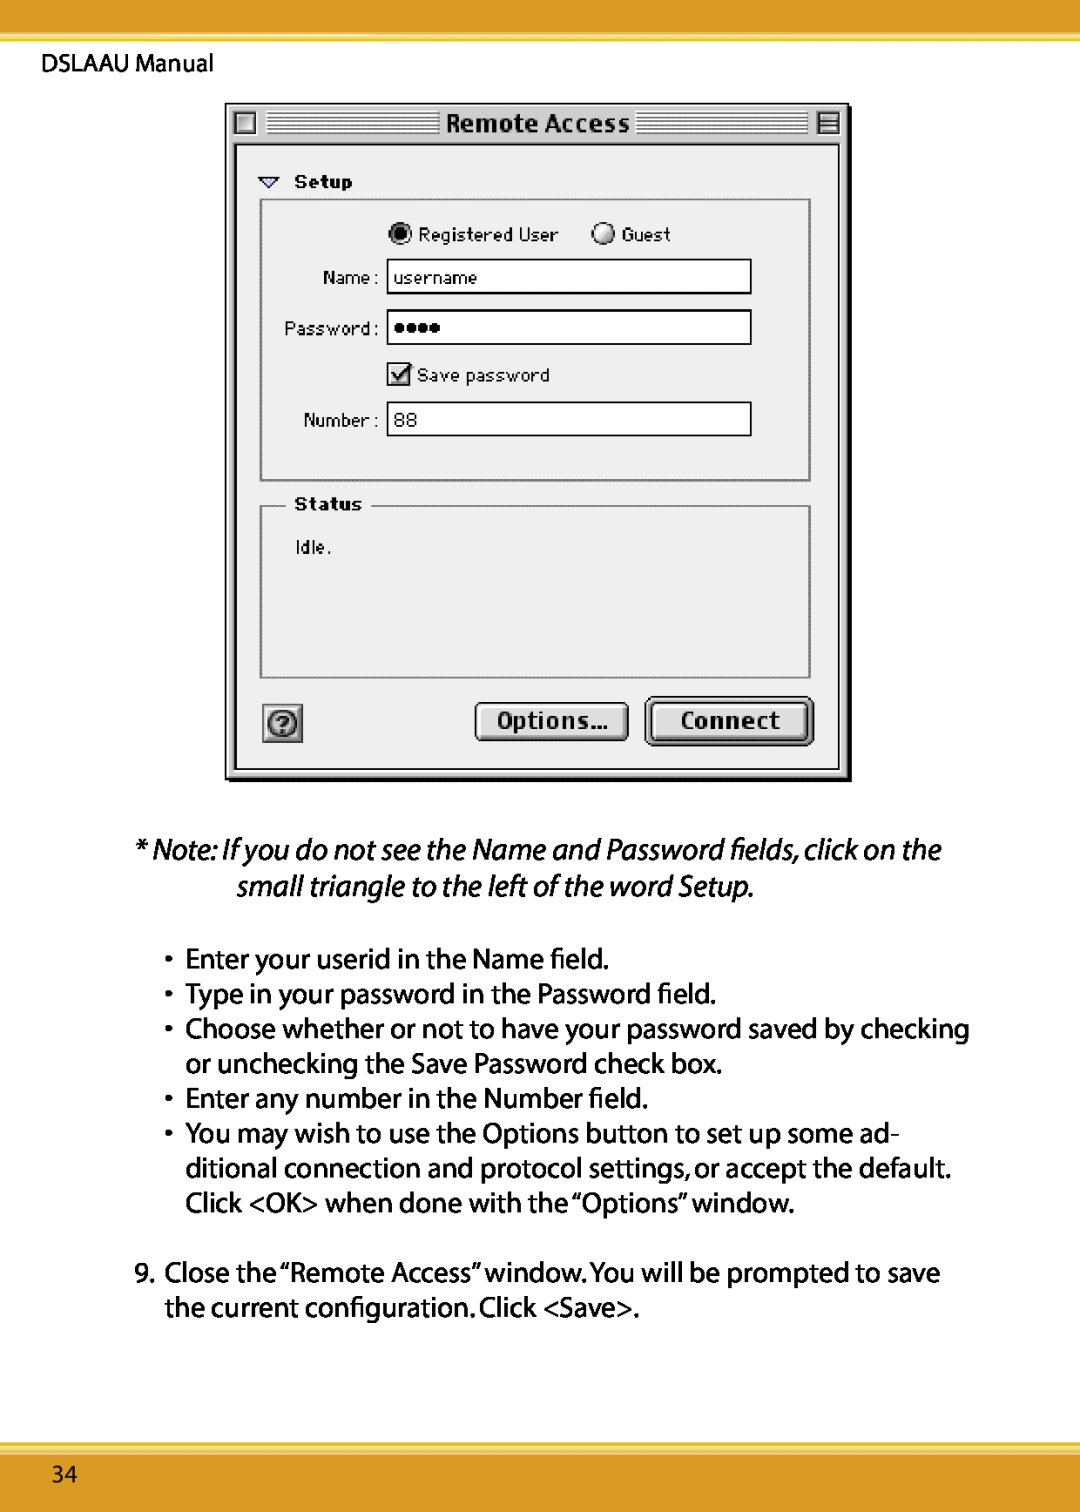 Corega DSLAAU user manual Enter your userid in the Name ﬁeld 